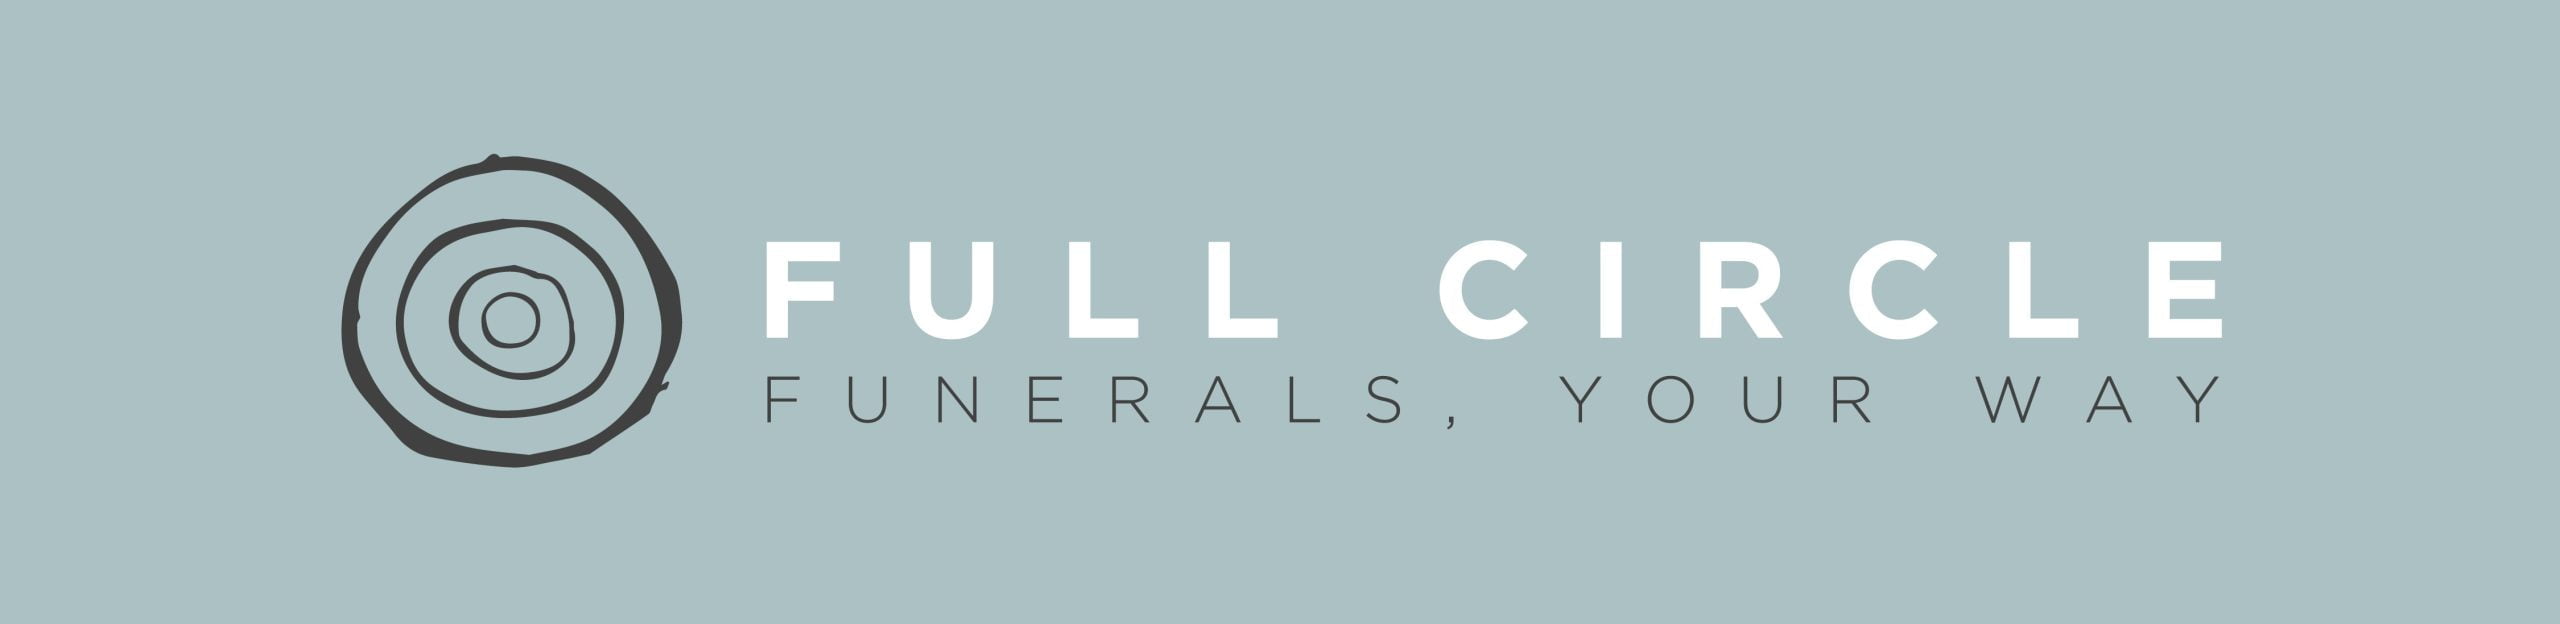 Full Circle Funerals logo